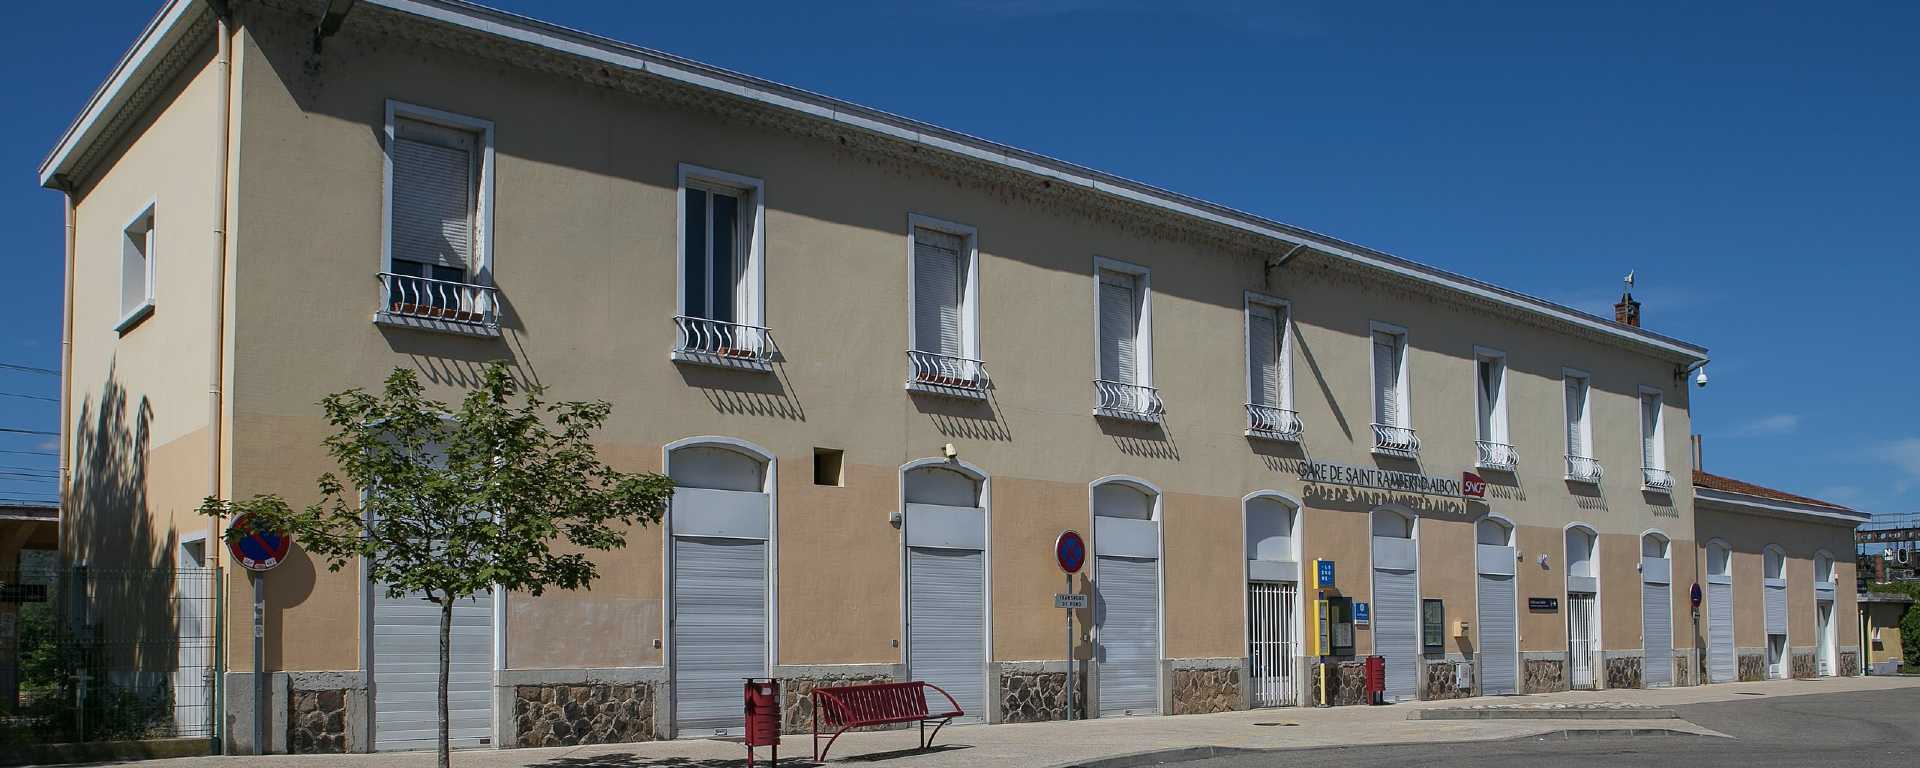 Gare de Saint-Rambert-d’Albon dans la Drôme